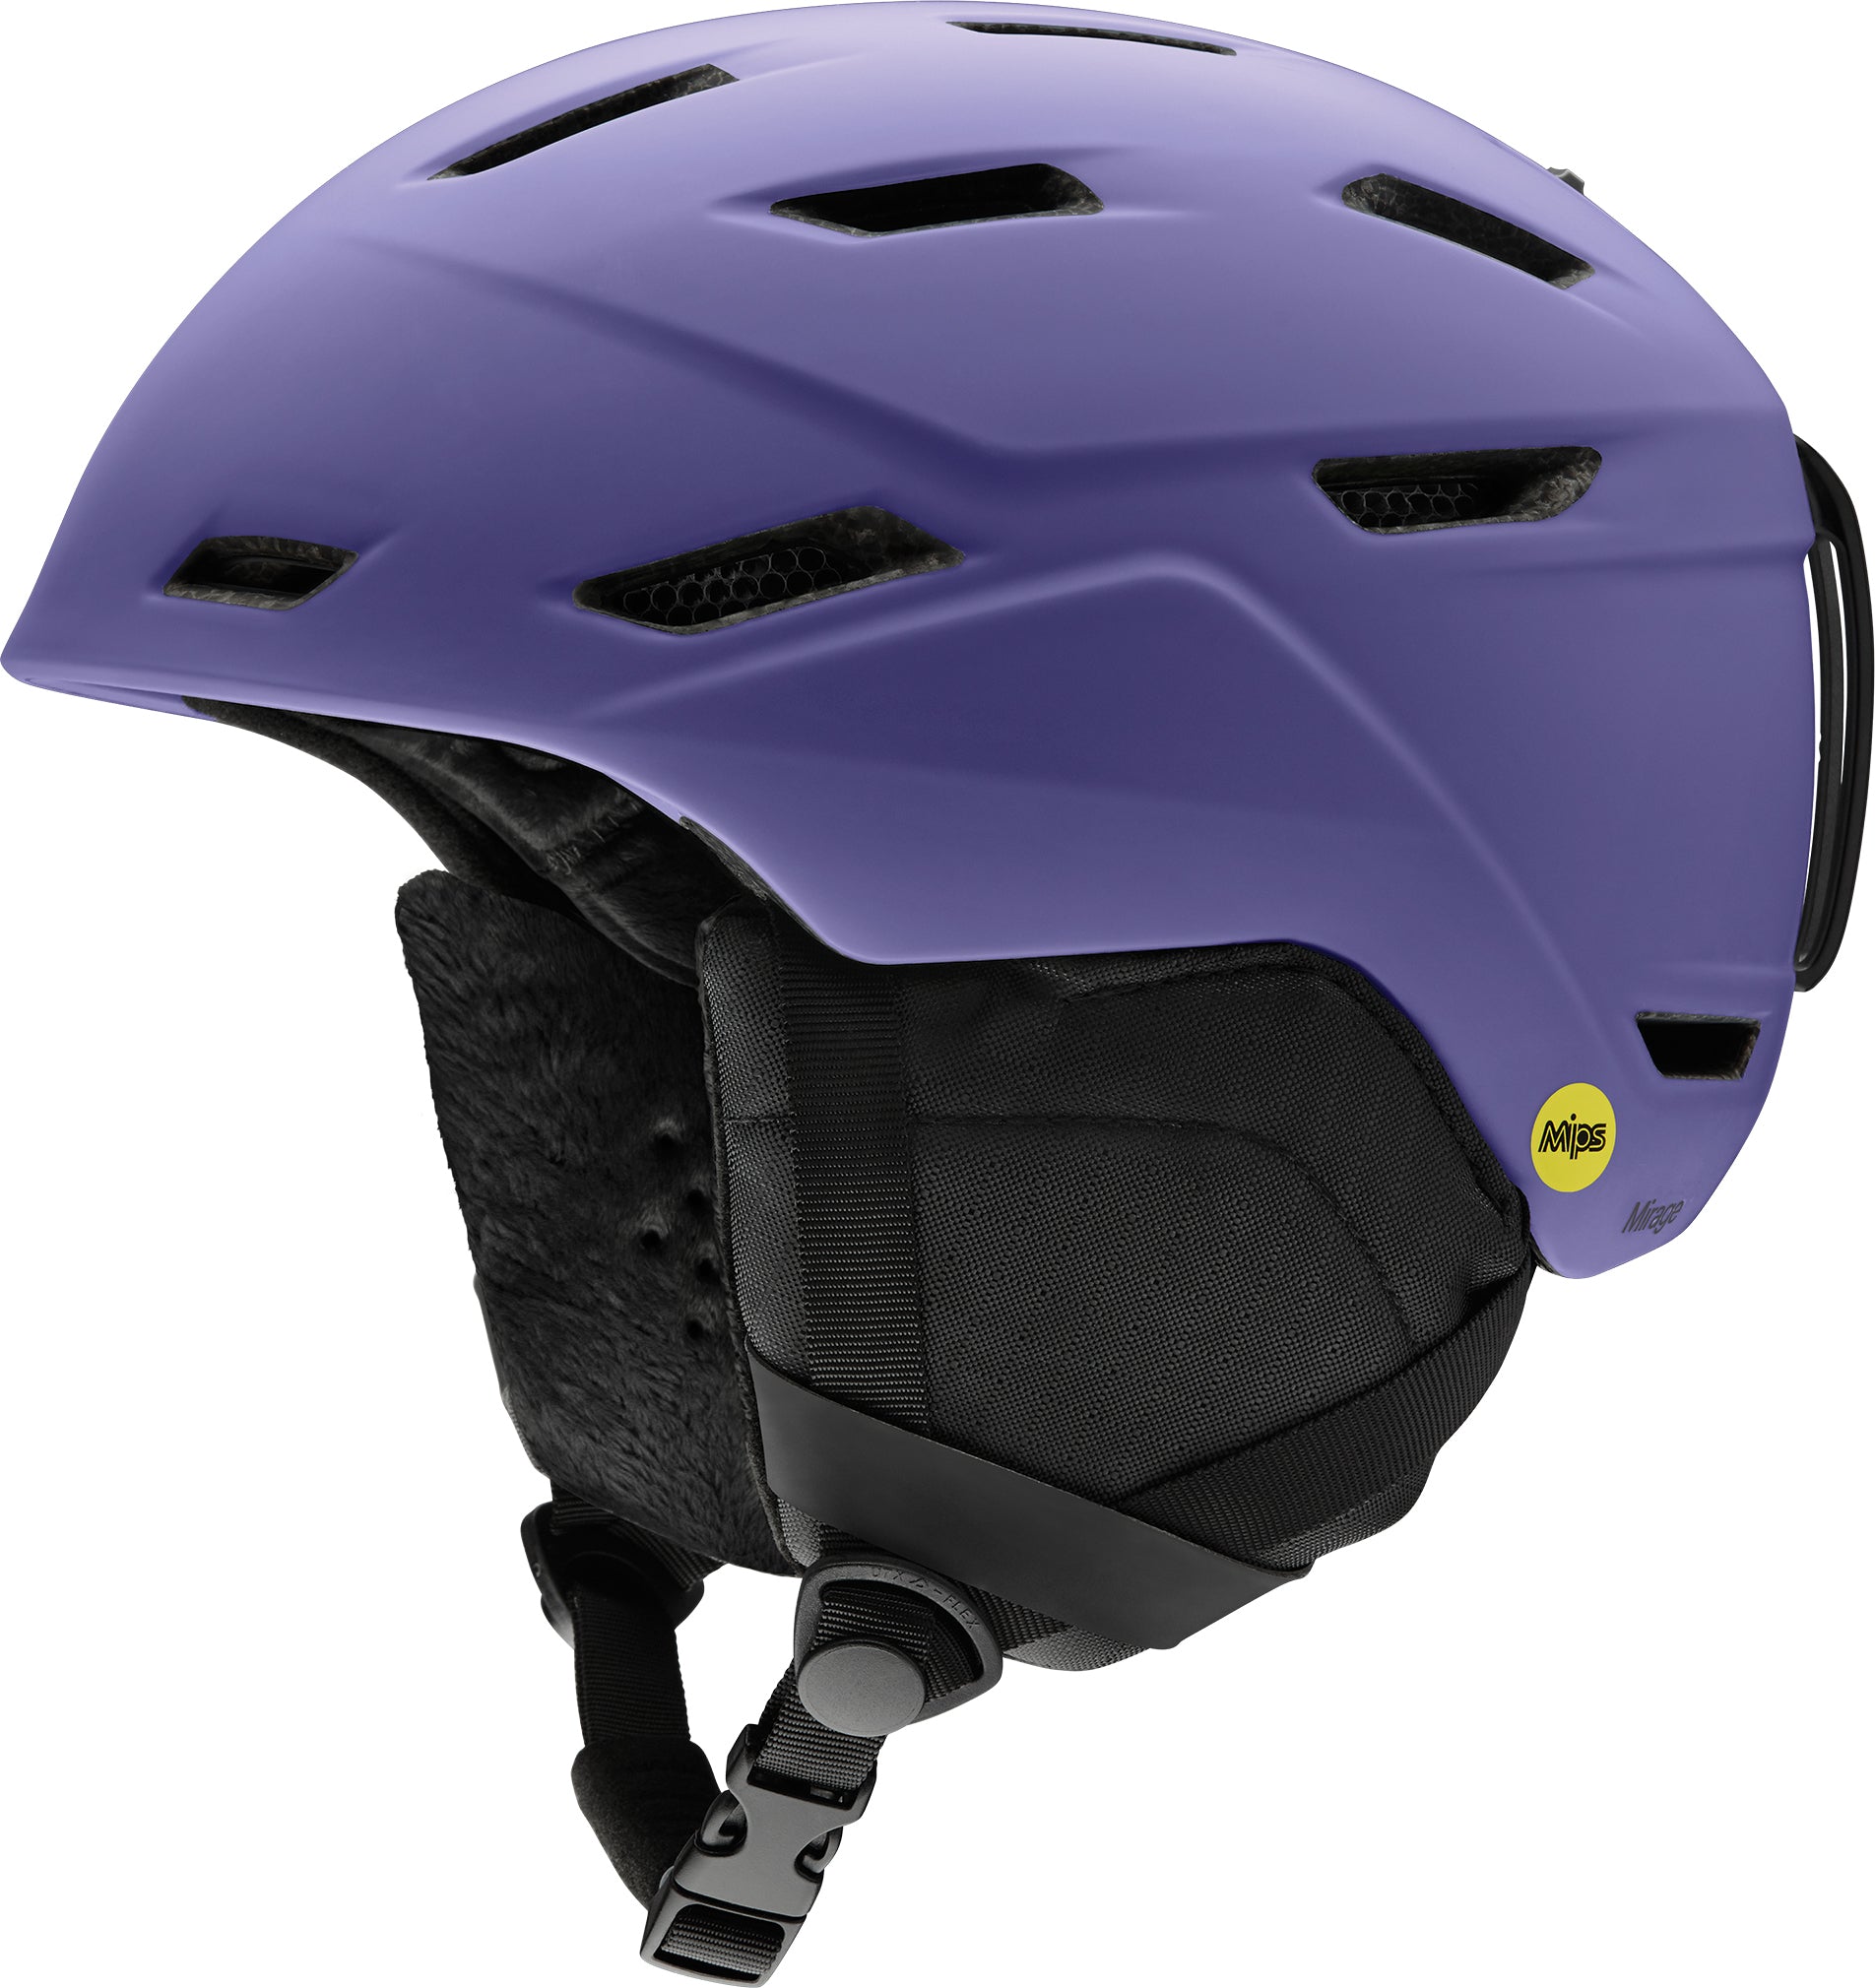 Smith Optics Mirage MIPS Snow Helmets - Women's | The Last Hunt